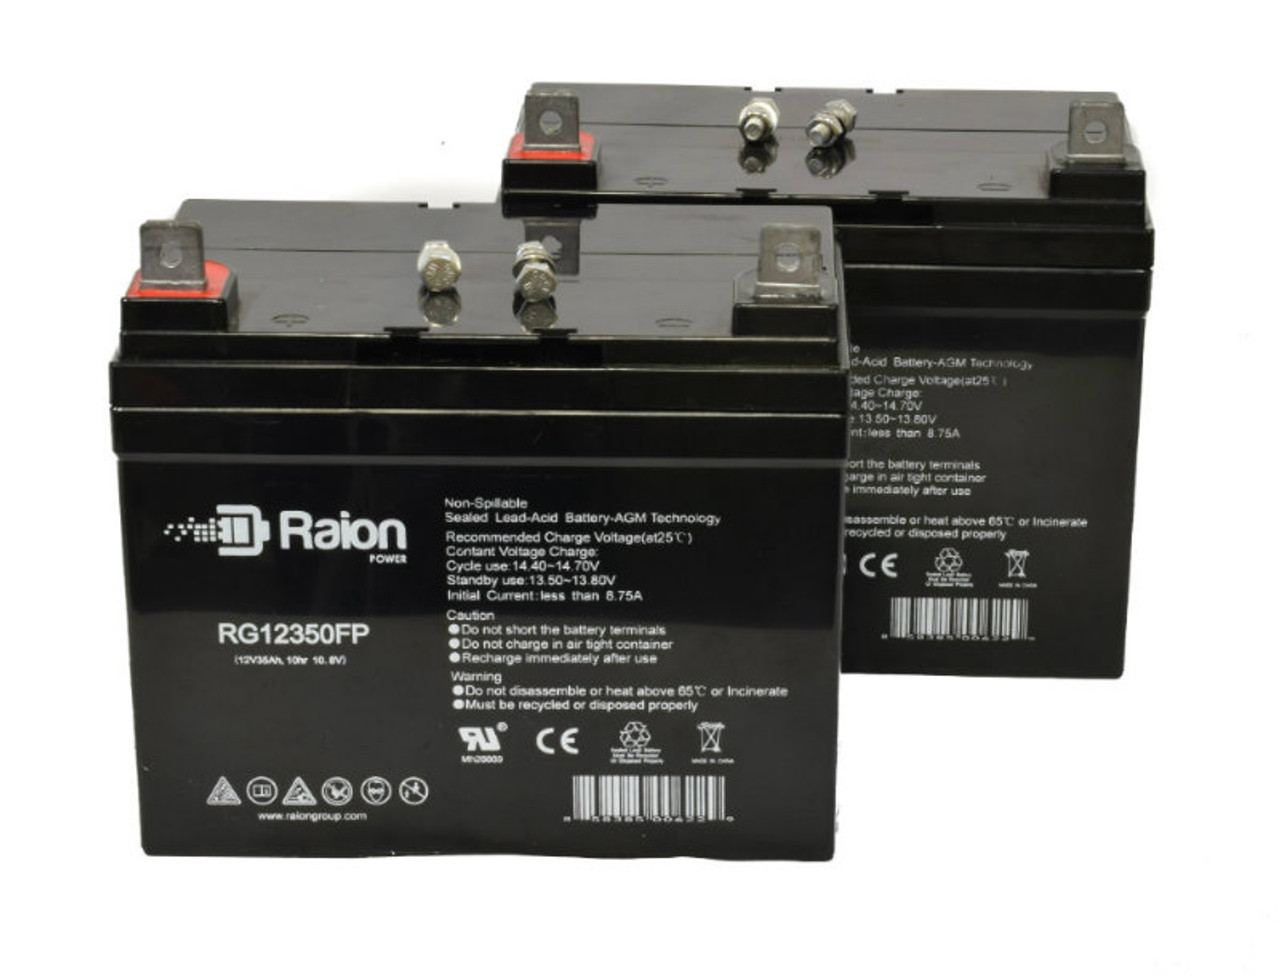 Raion Power Replacement 12V 35Ah Lawn Mower Battery for Husqvarna YTH 1542 XP - 2 Pack